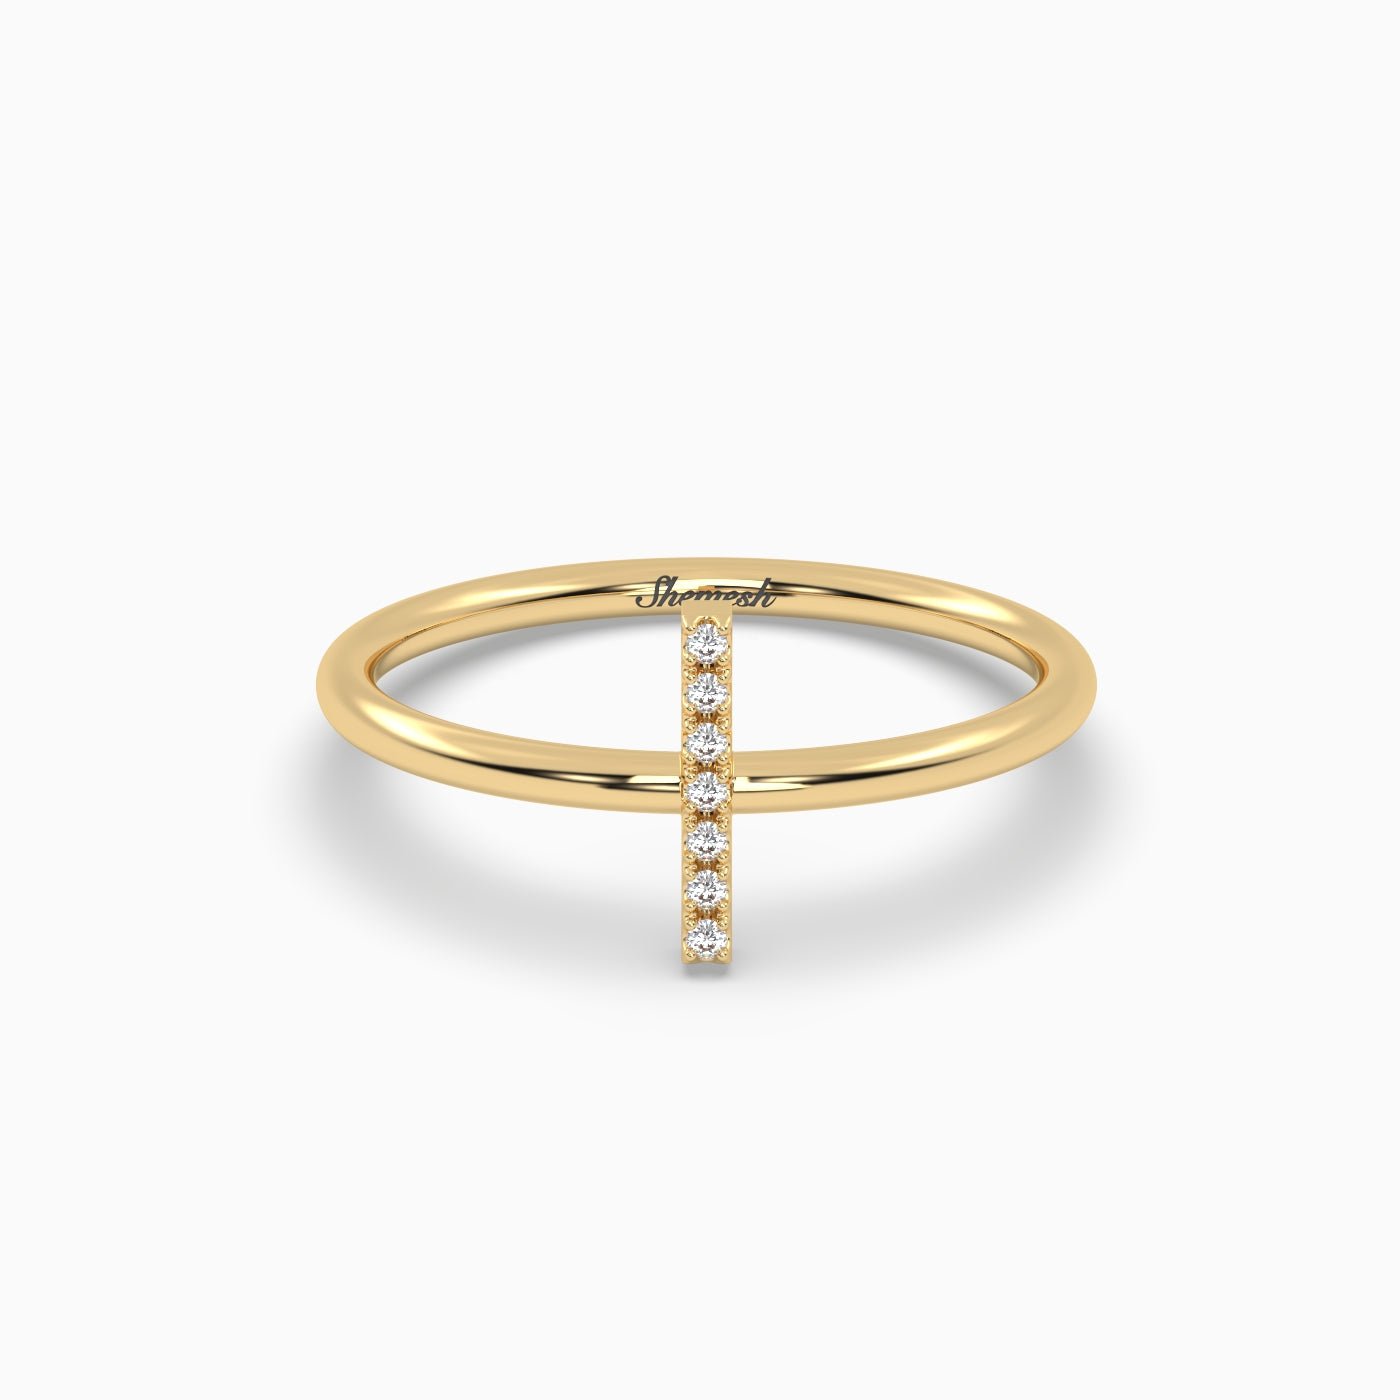 18K Gold "I" Initial Ring - shemesh_diamonds